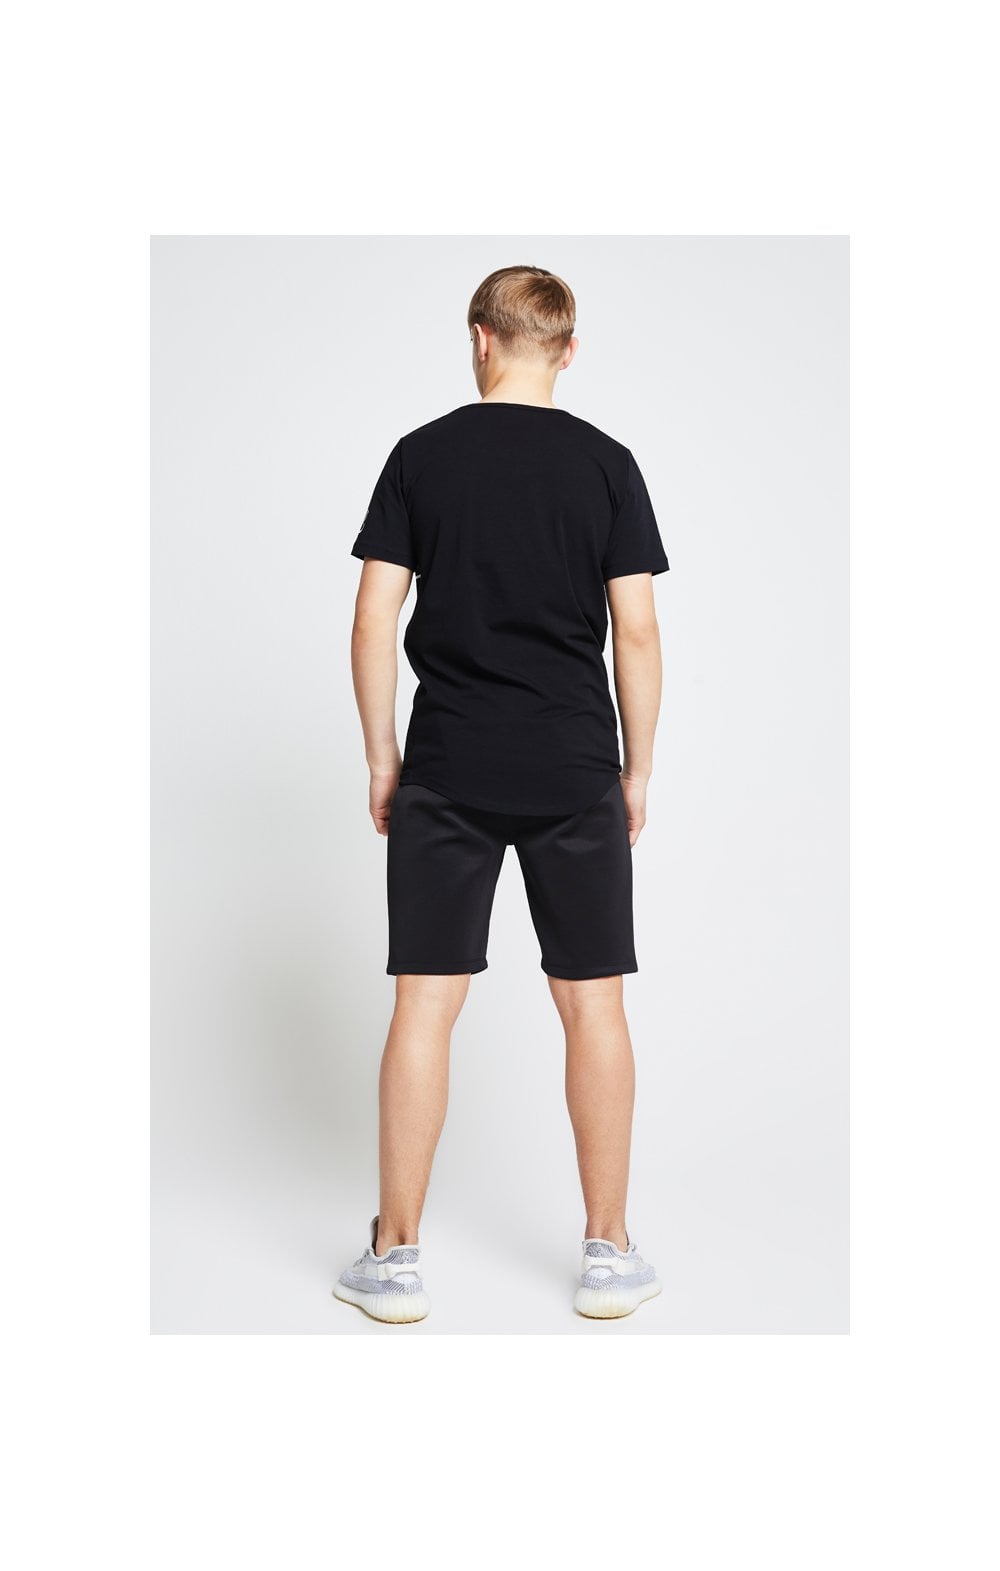 Illusive London Tape Jersey Shorts - Black (5)